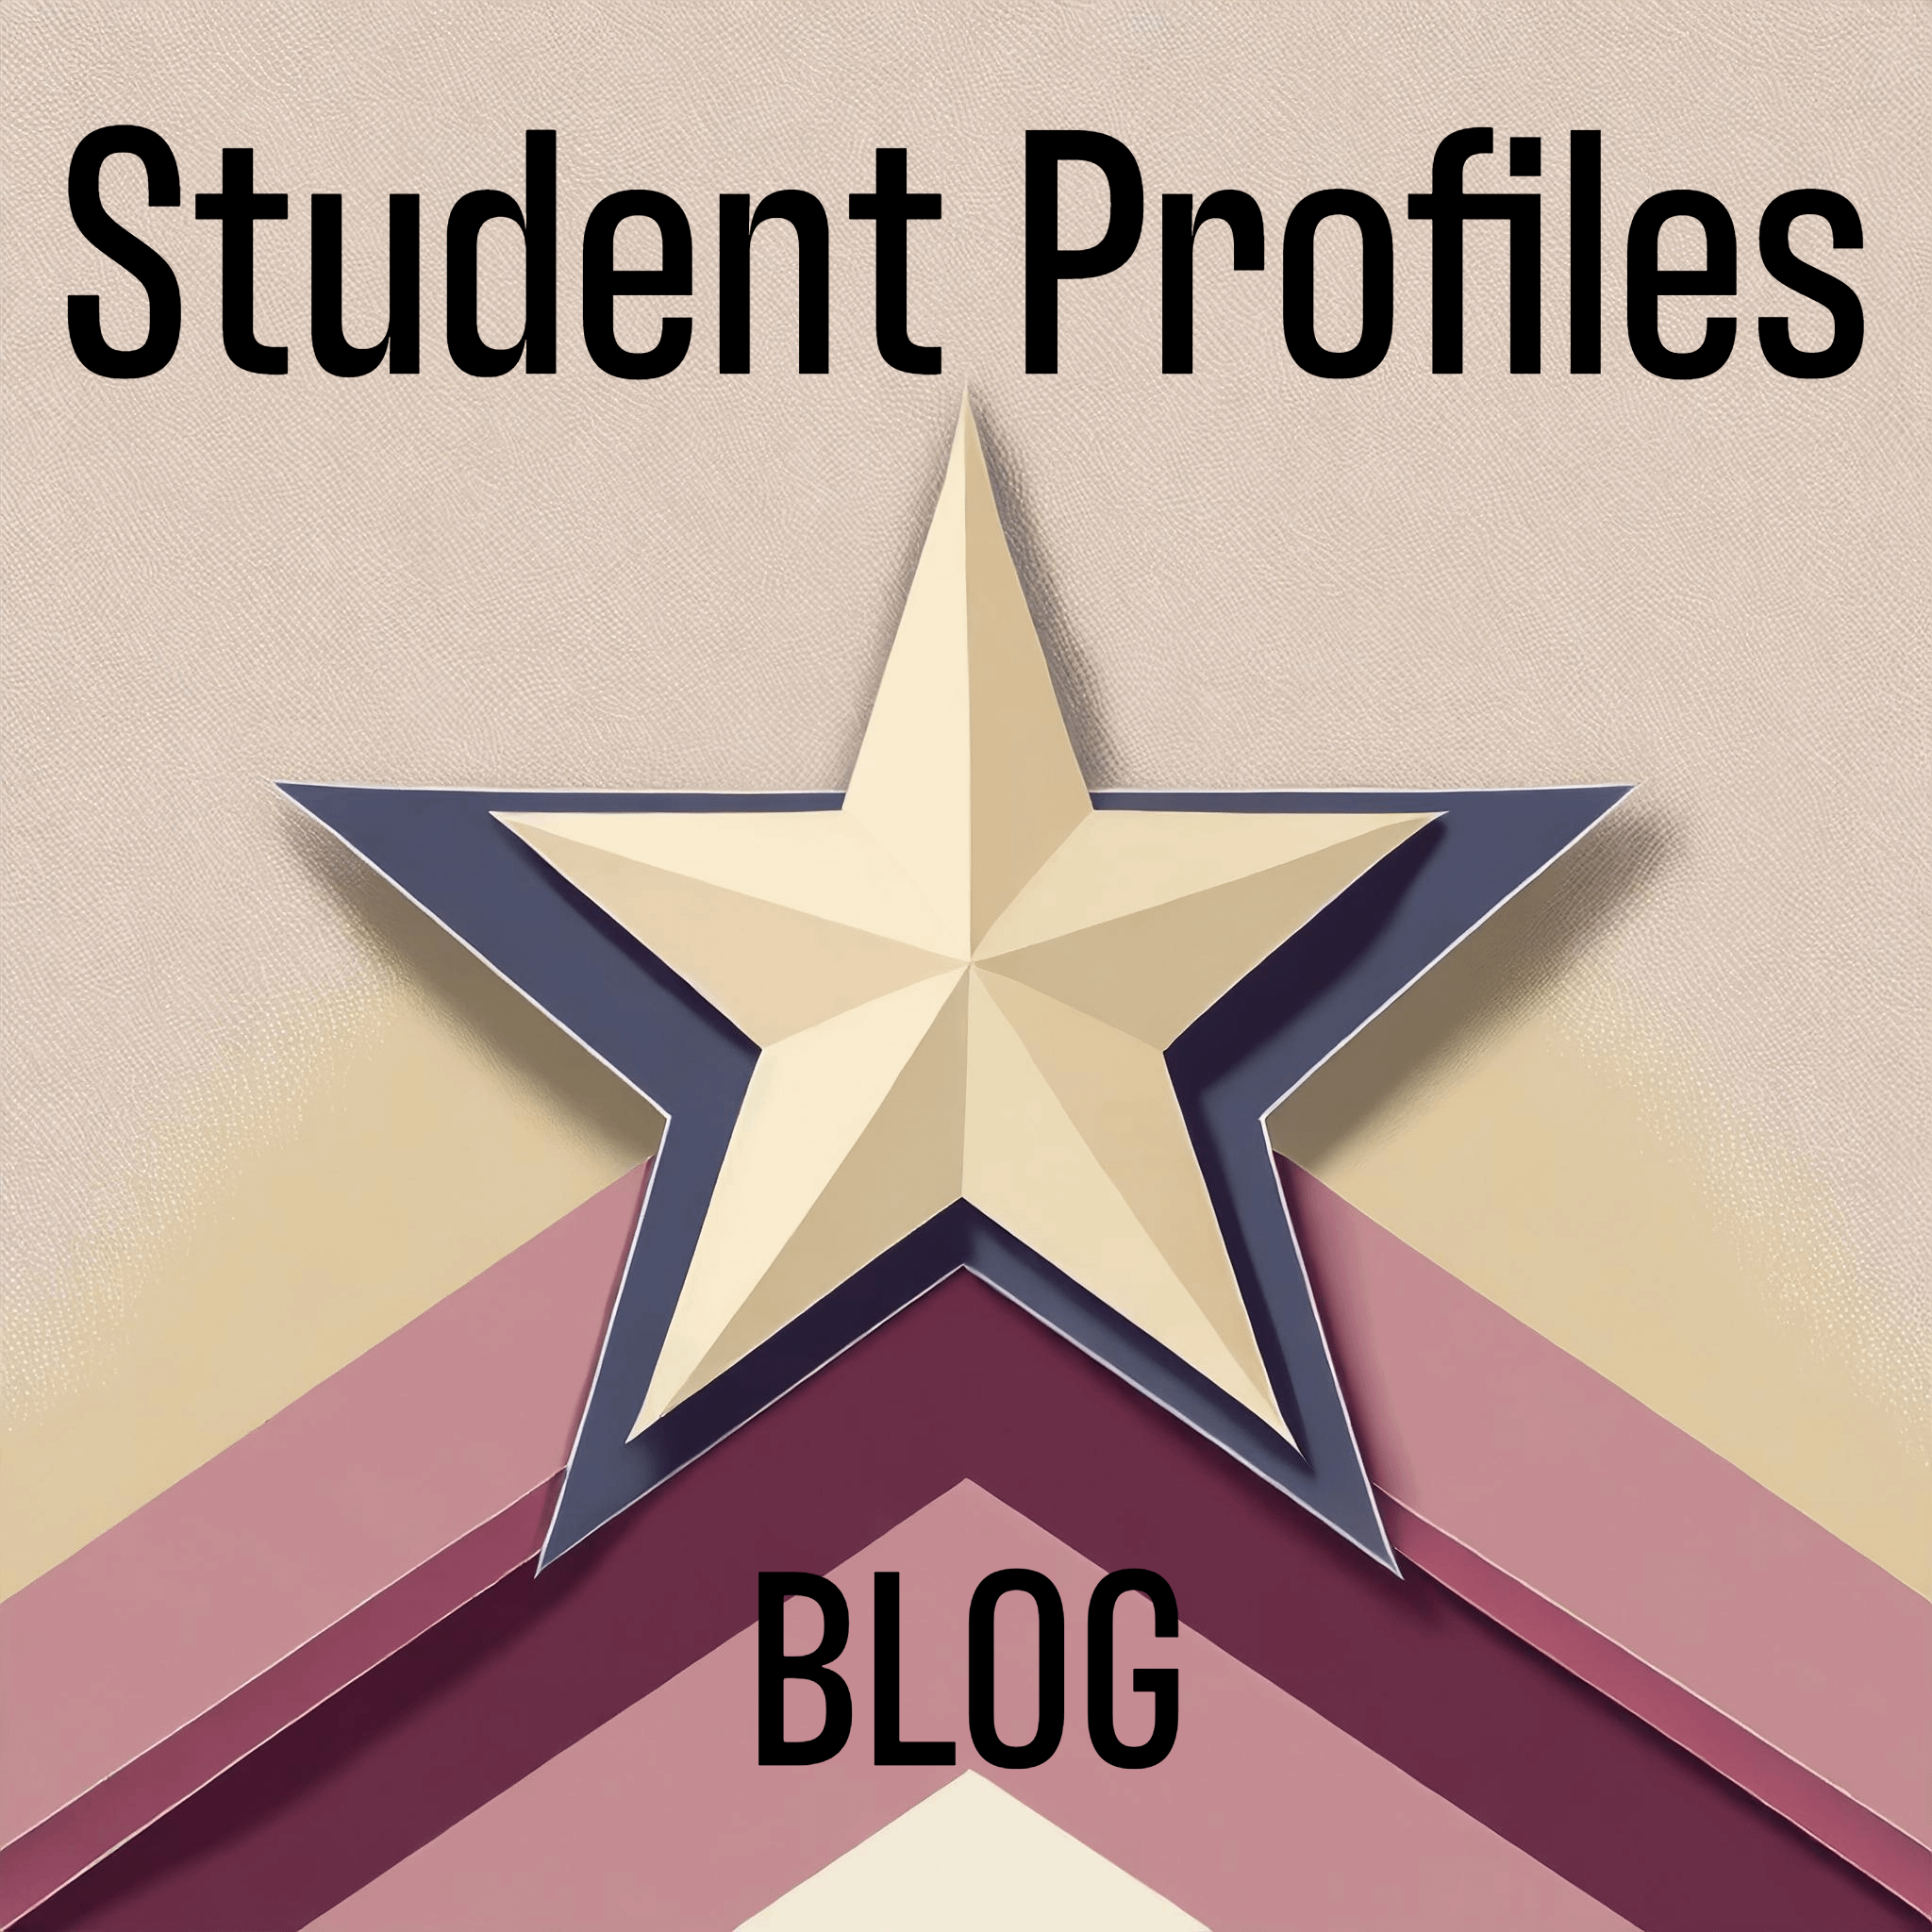 Student Profiles Blog